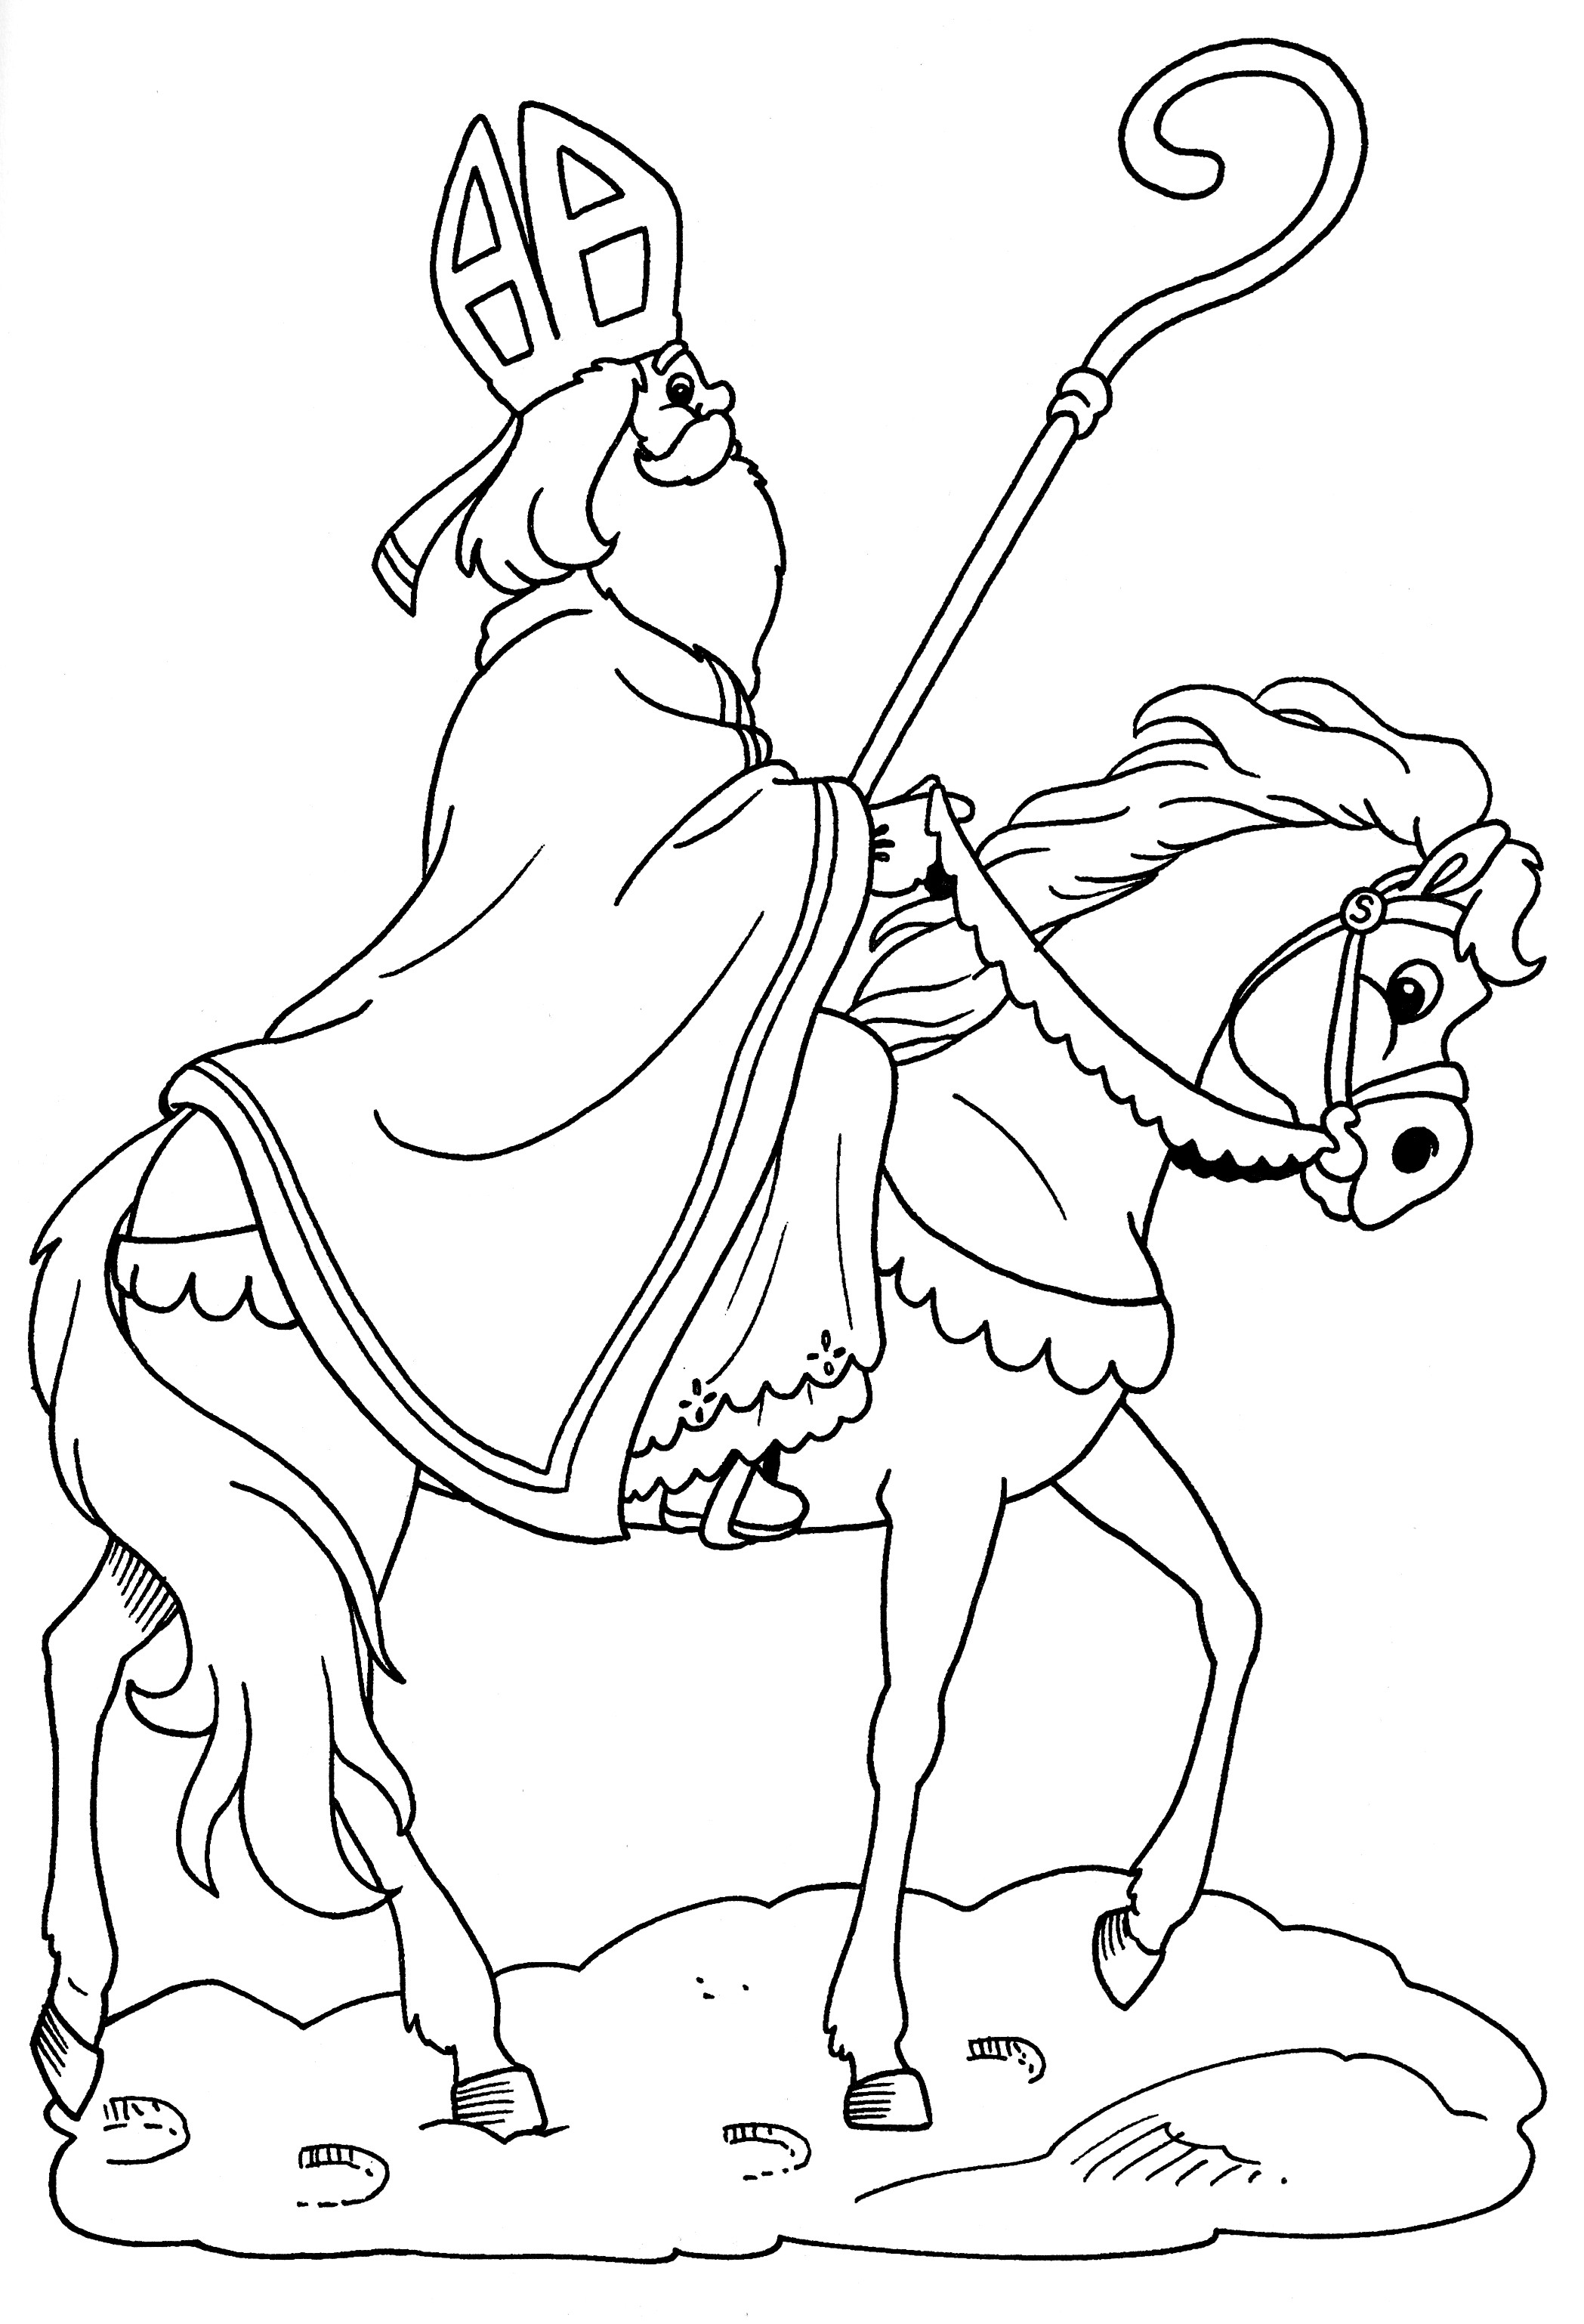 Saint Nicholas on horseback with his pilgrim's staff